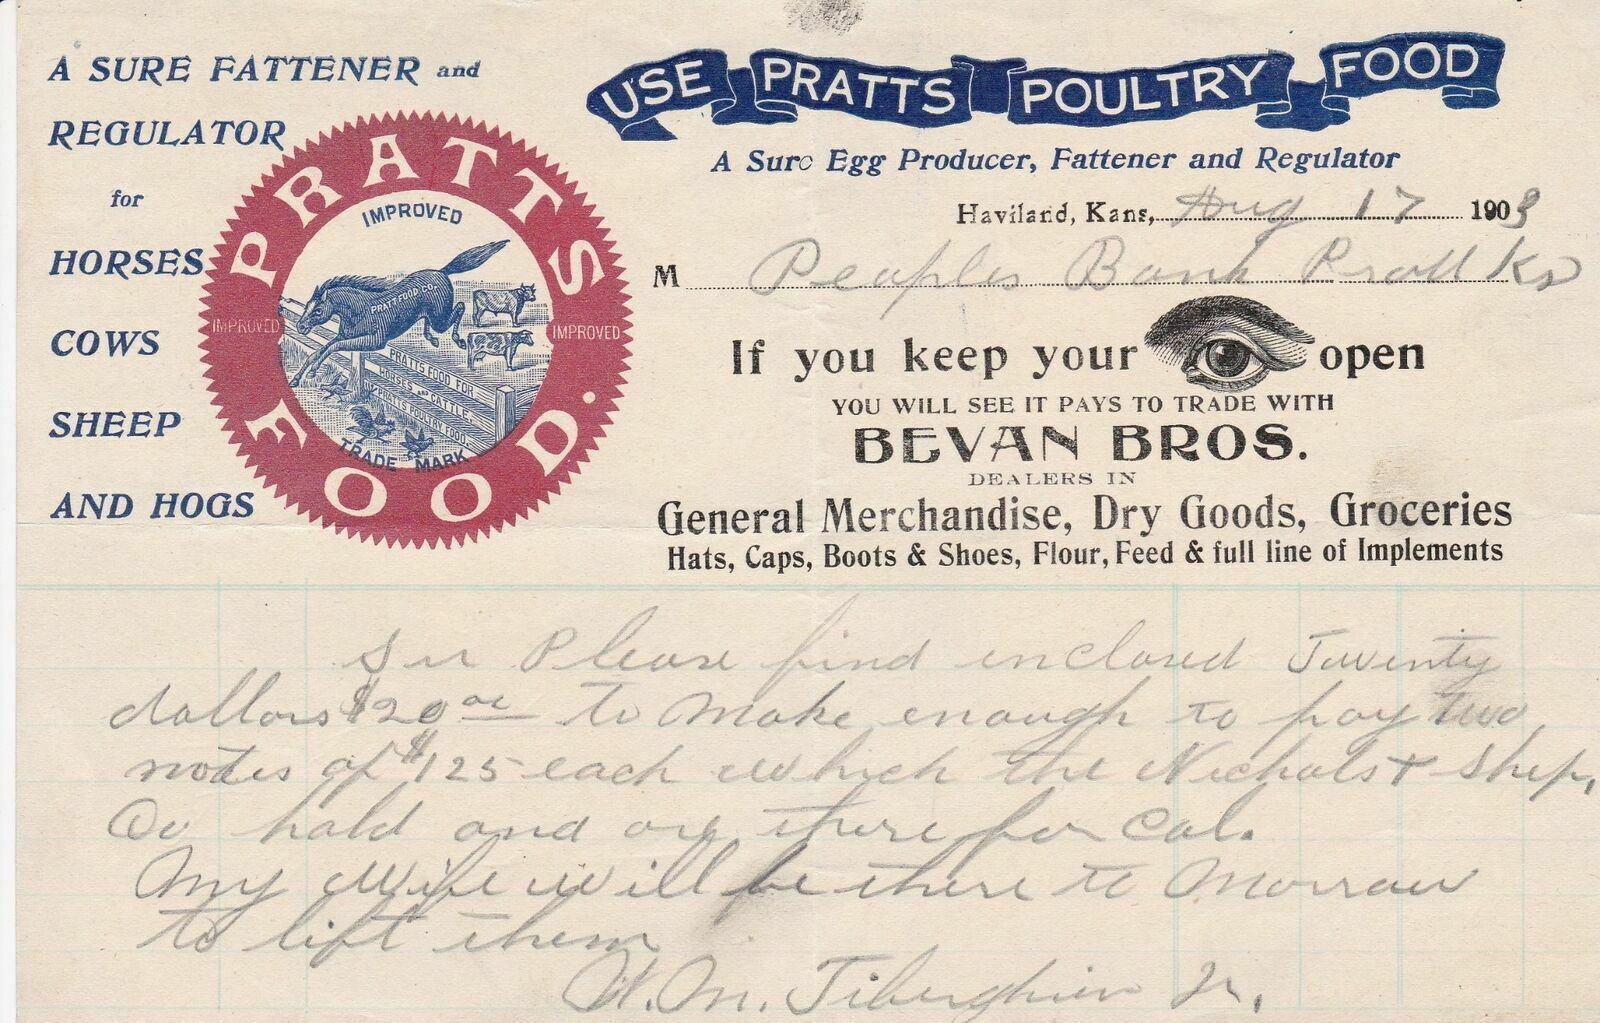 U.S. Pratts Food Logo Haviland 1903 Use Pratts Poultry Food Slogan Letter  43486